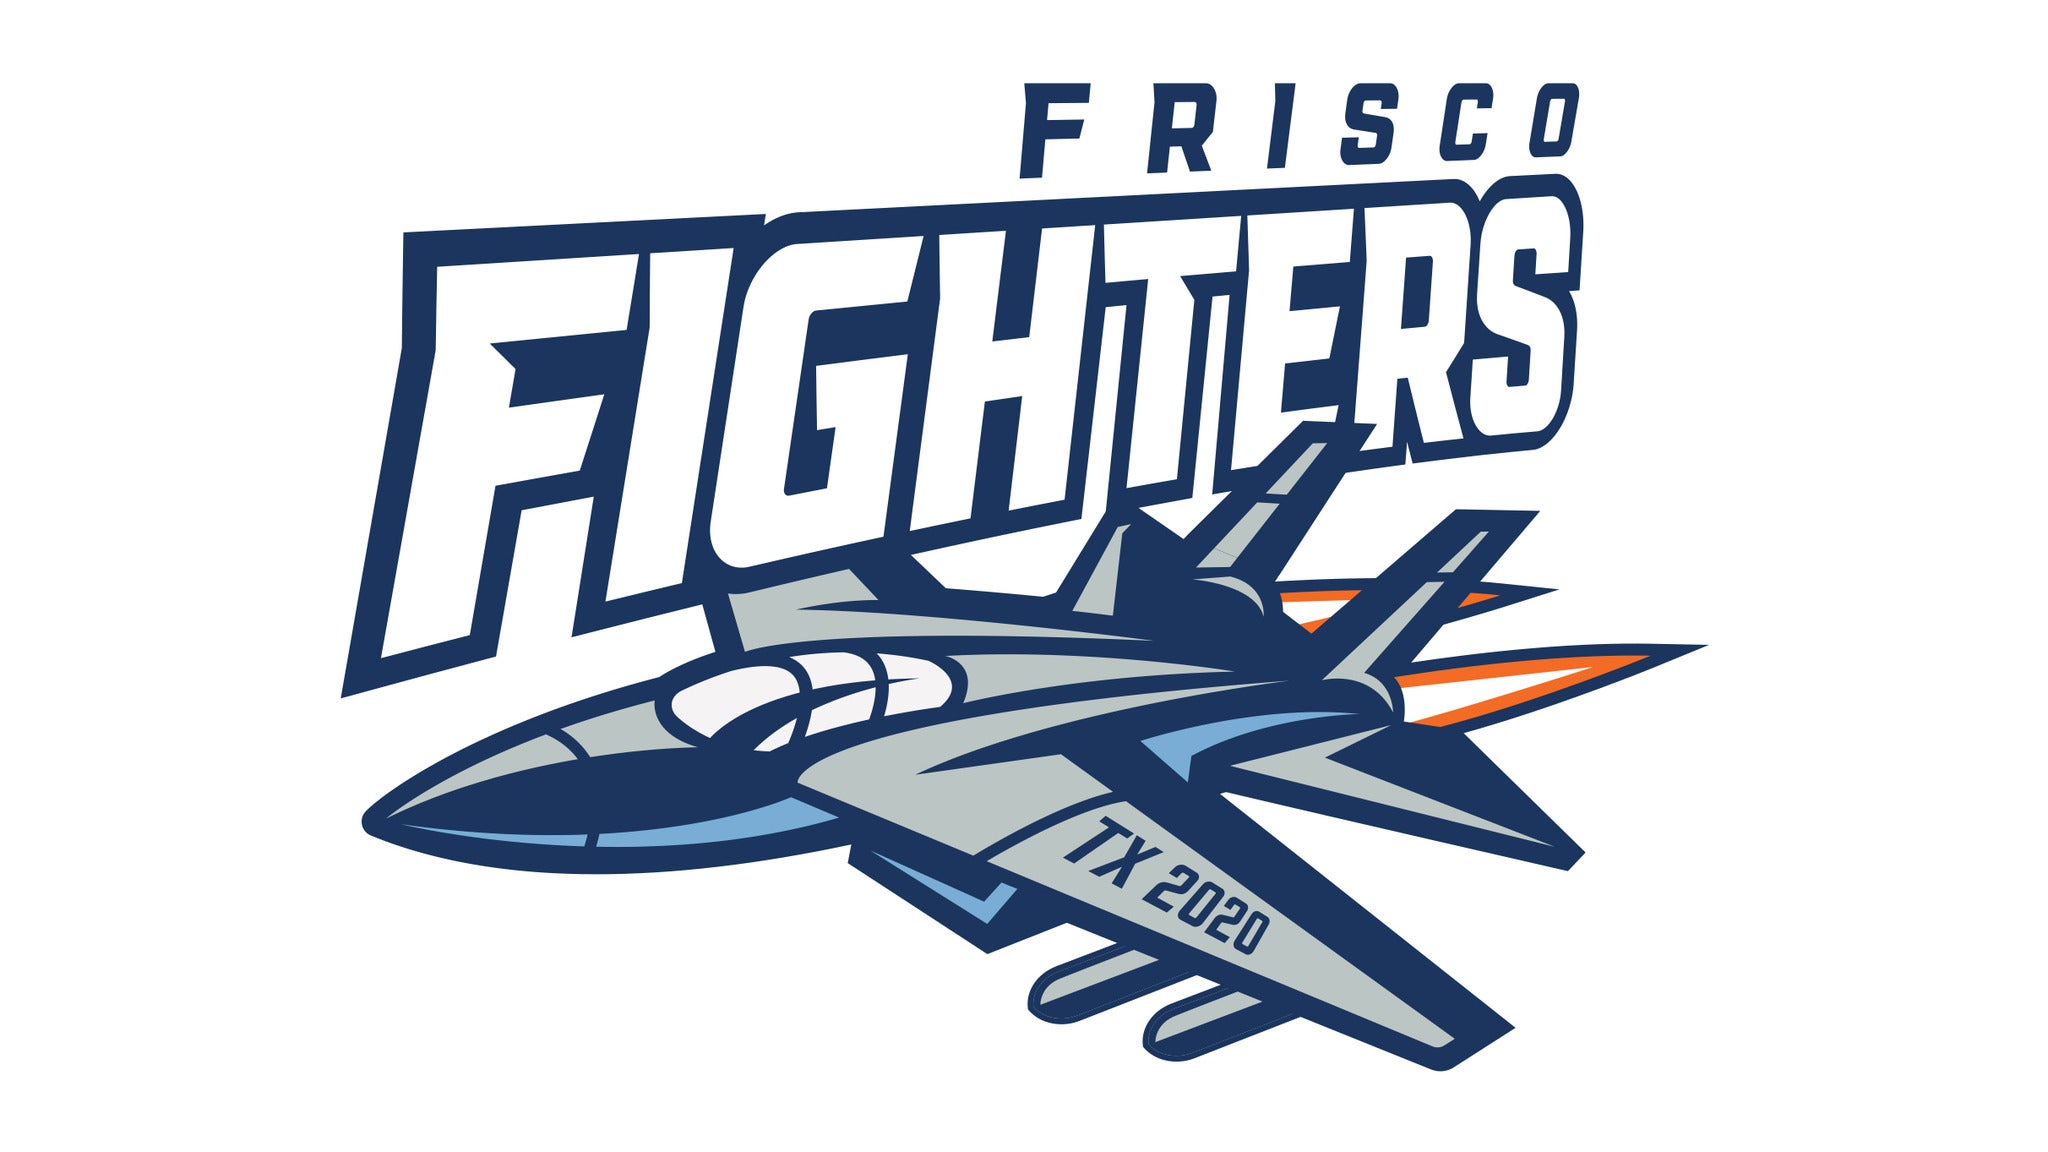 Frisco Fighters vs. Tulsa Oilers Football